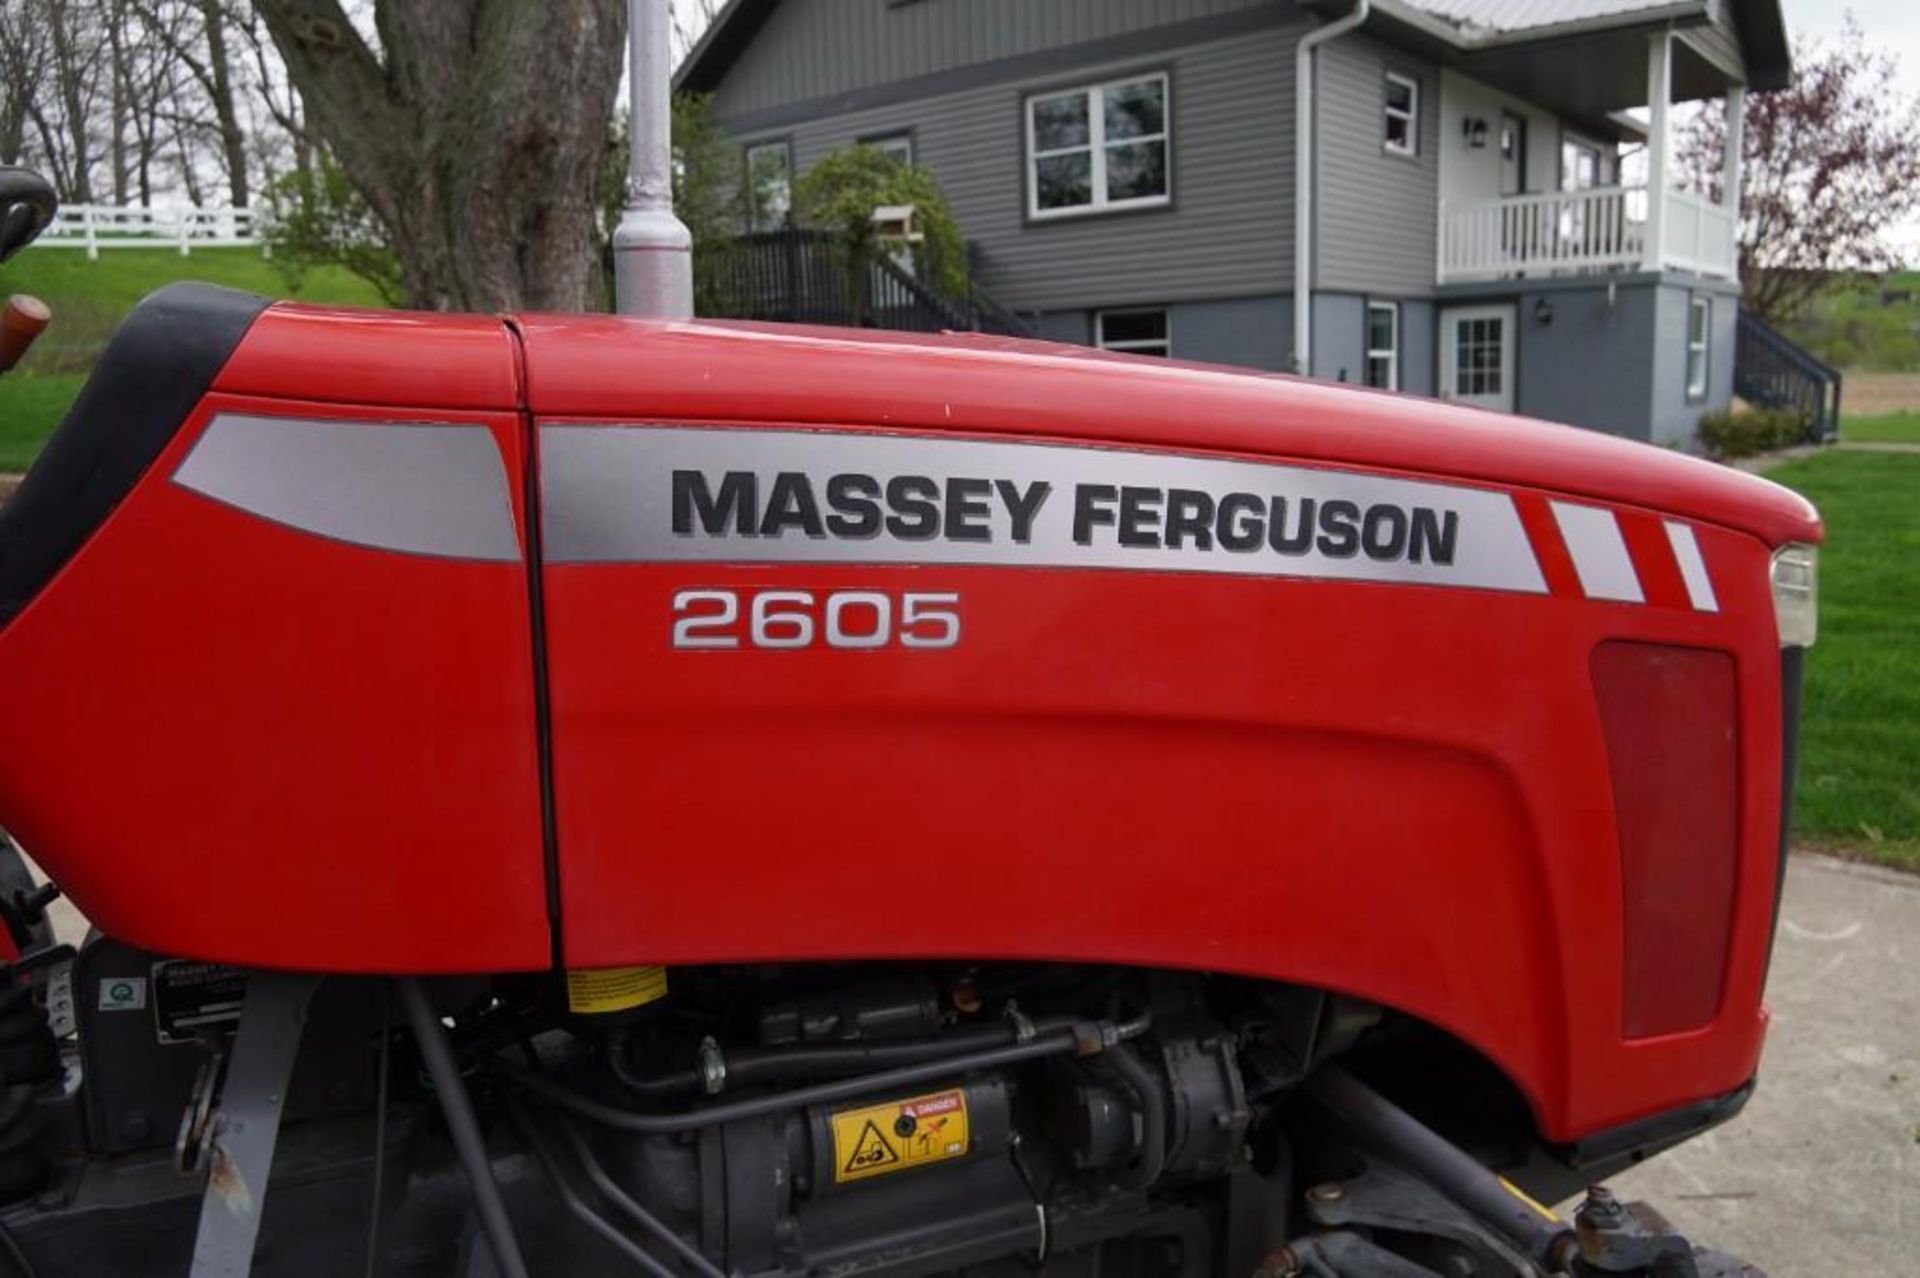 Massey Ferguson 2605 Tractor - Image 31 of 35